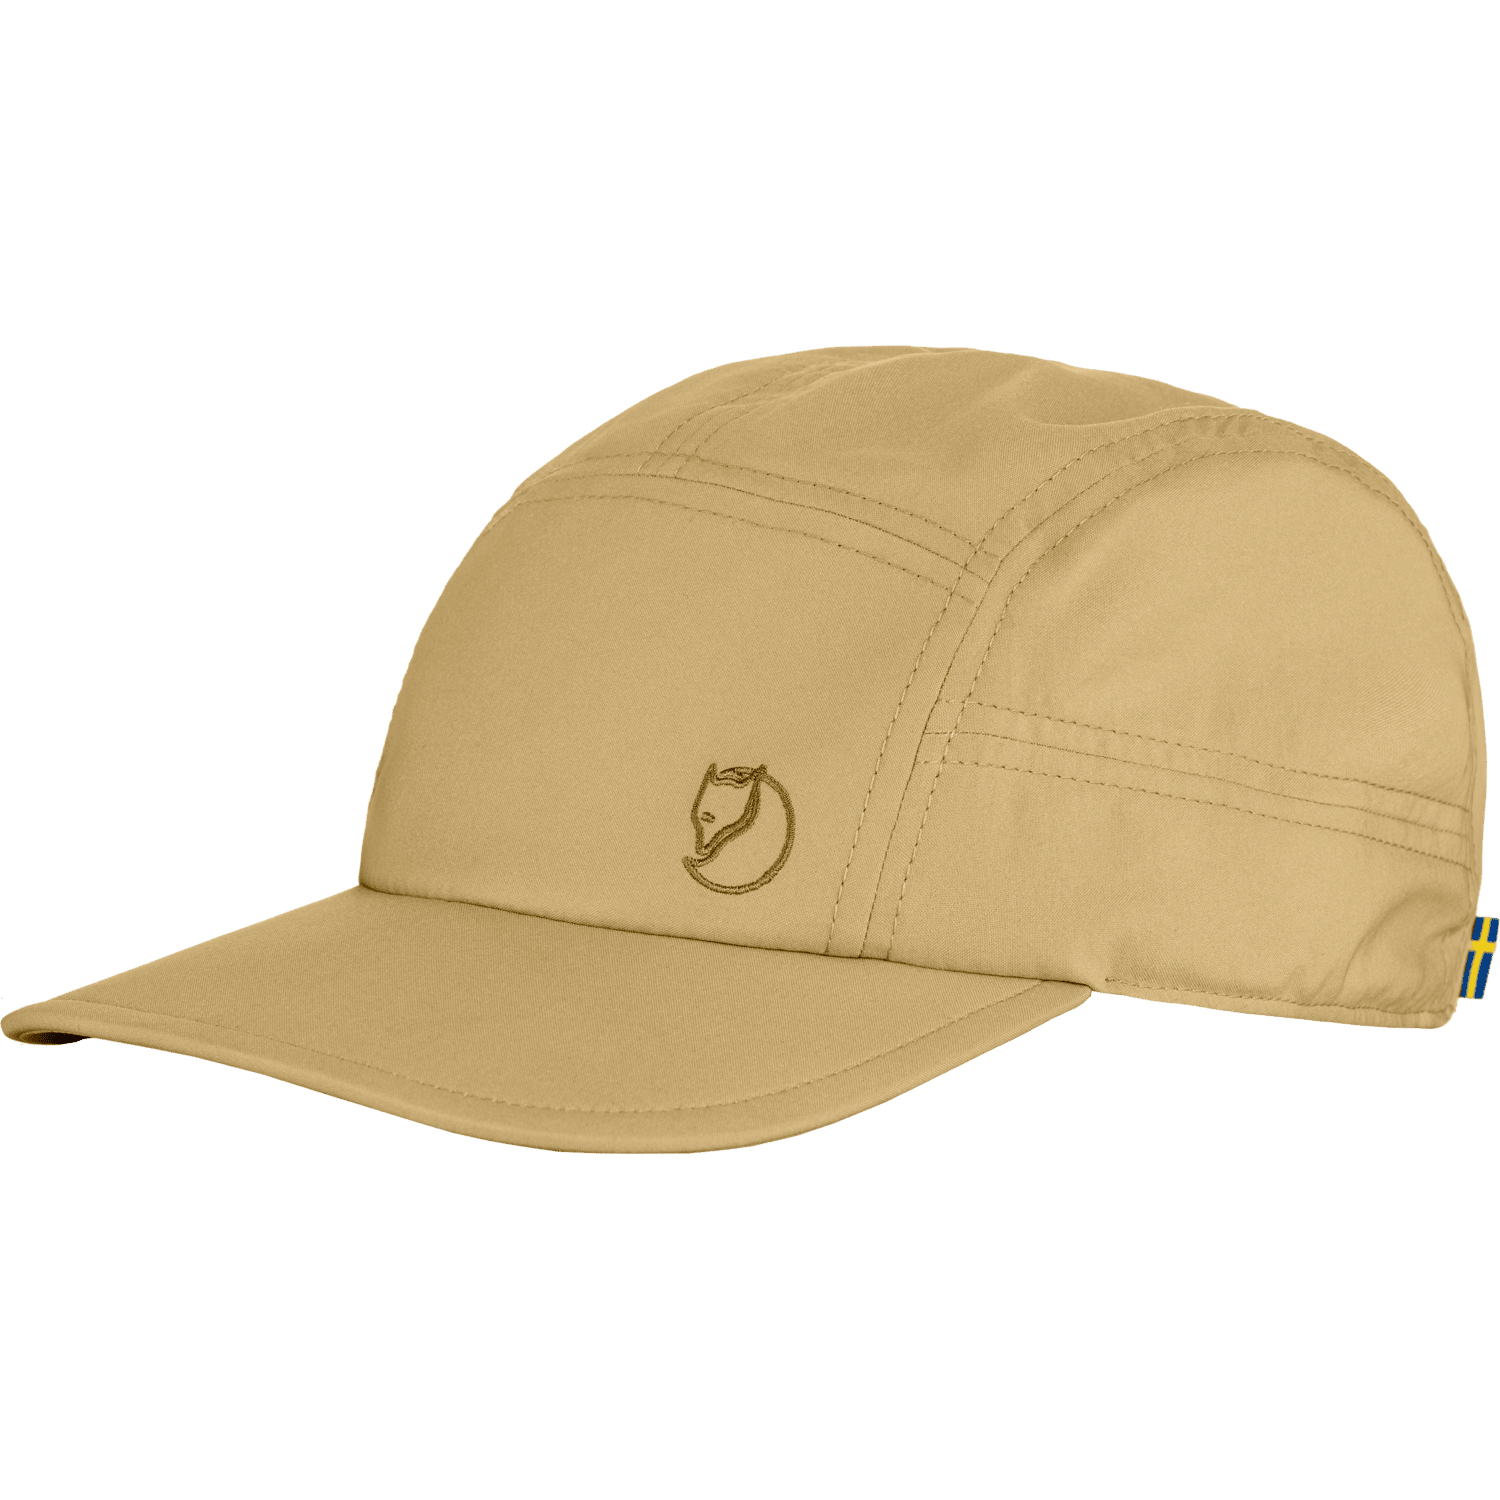 Fjällräven - Abisko Hike Lite Cap - Recycled Polyester - Weekendbee - sustainable sportswear